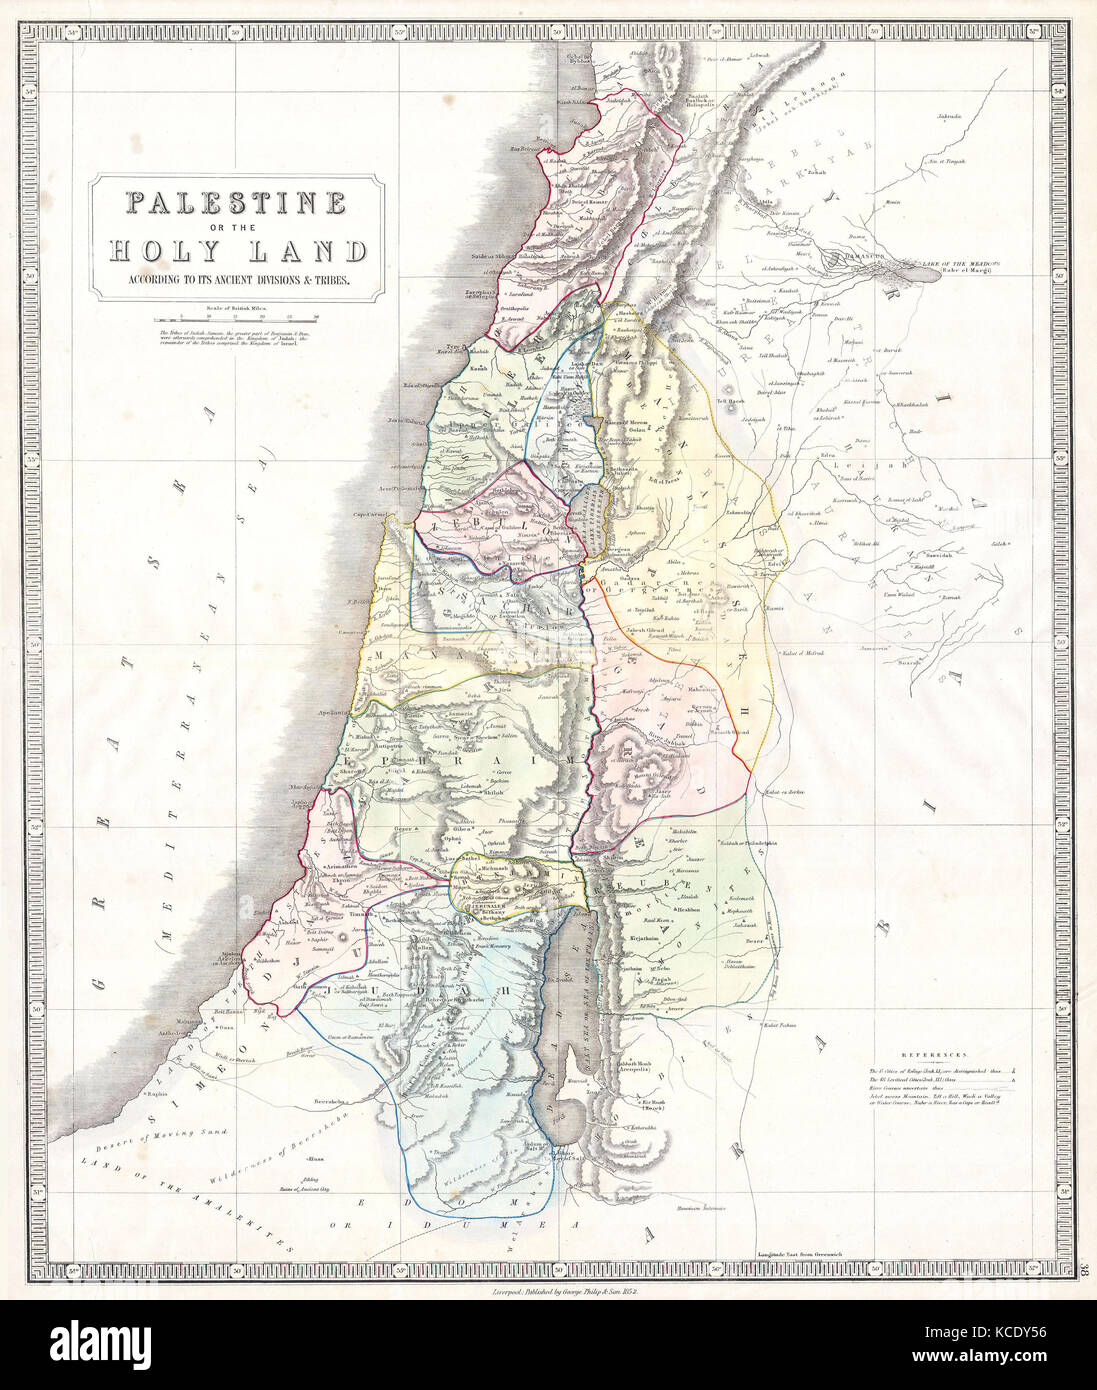 1852, Philip Map of Palestine, Israel, Holy Land Stock Photo